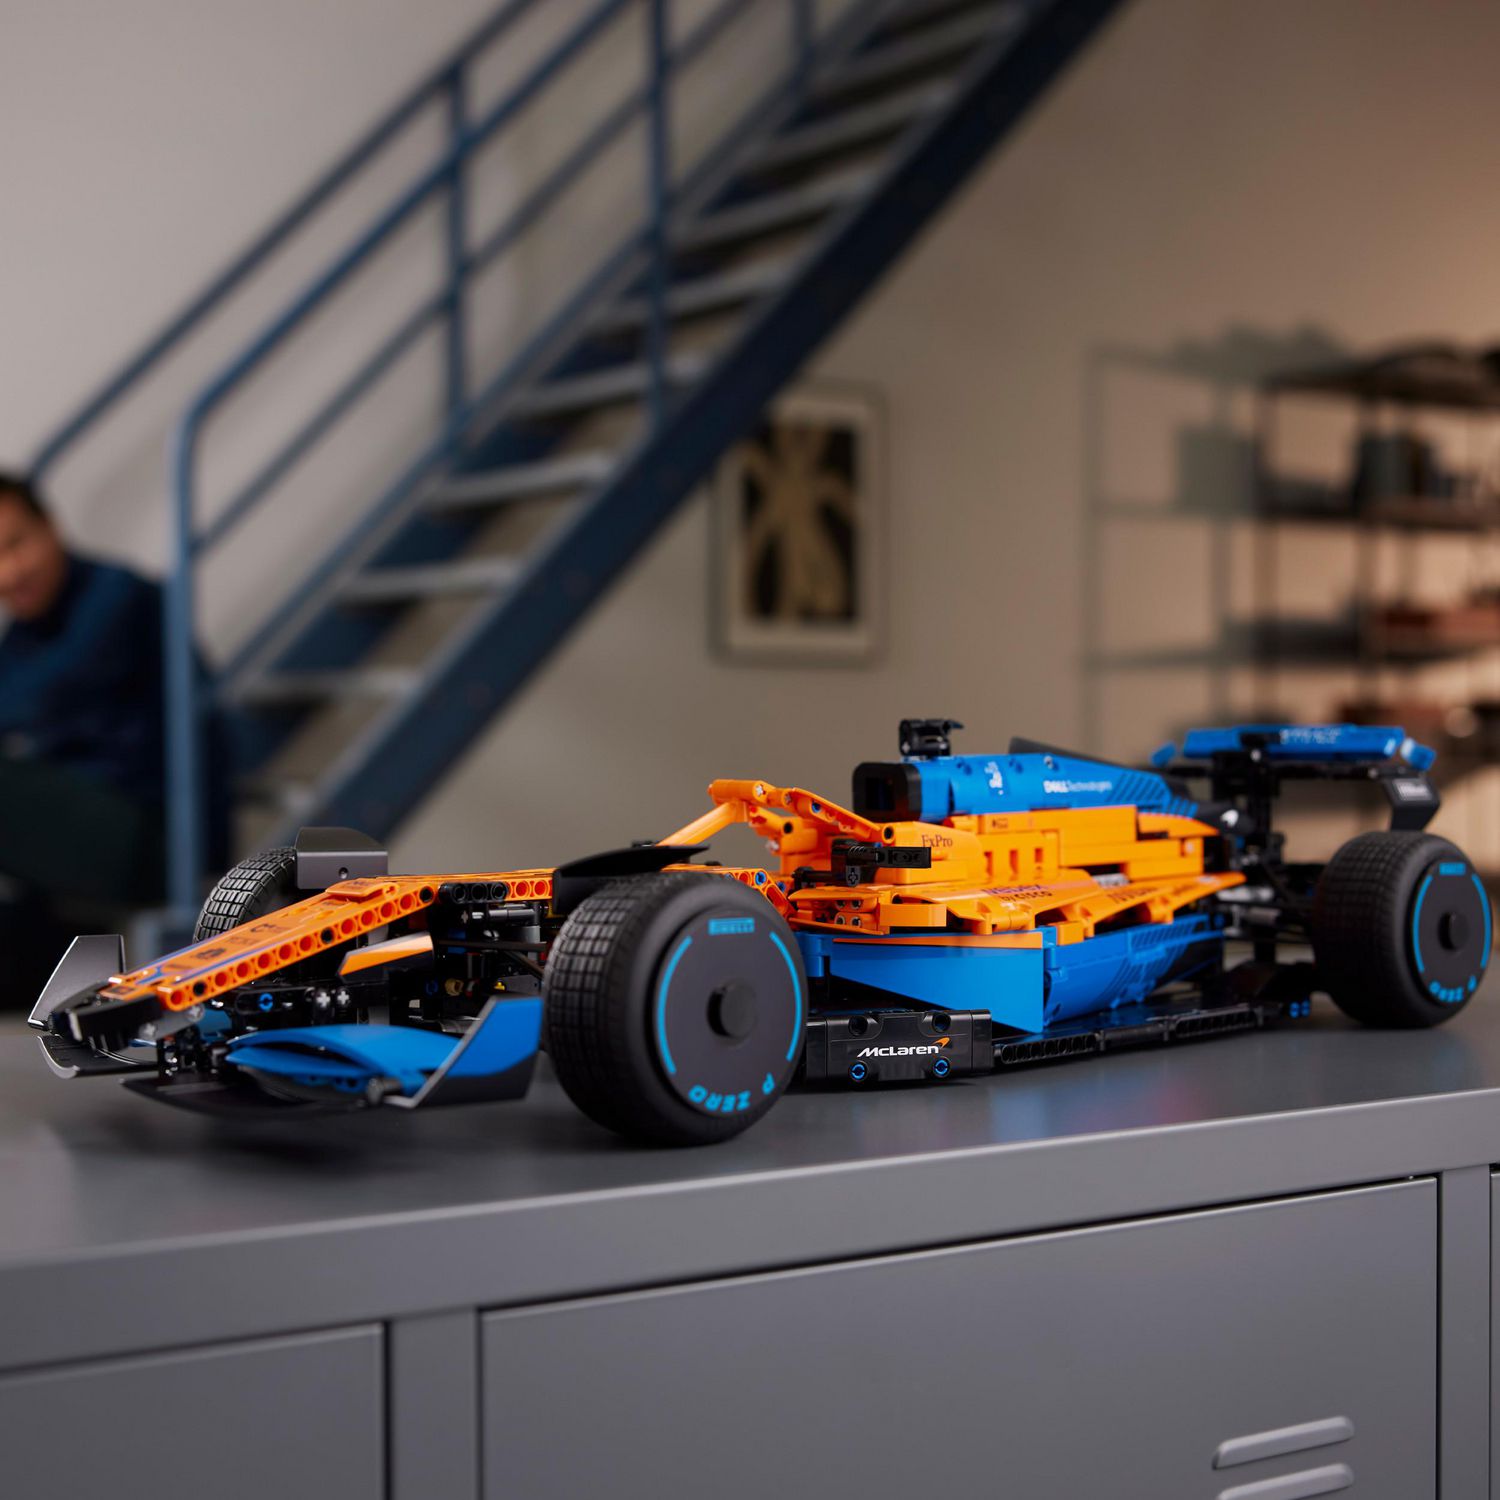 LEGO Technic McLaren Formula 1 Race Car 42141 Model Toy Building